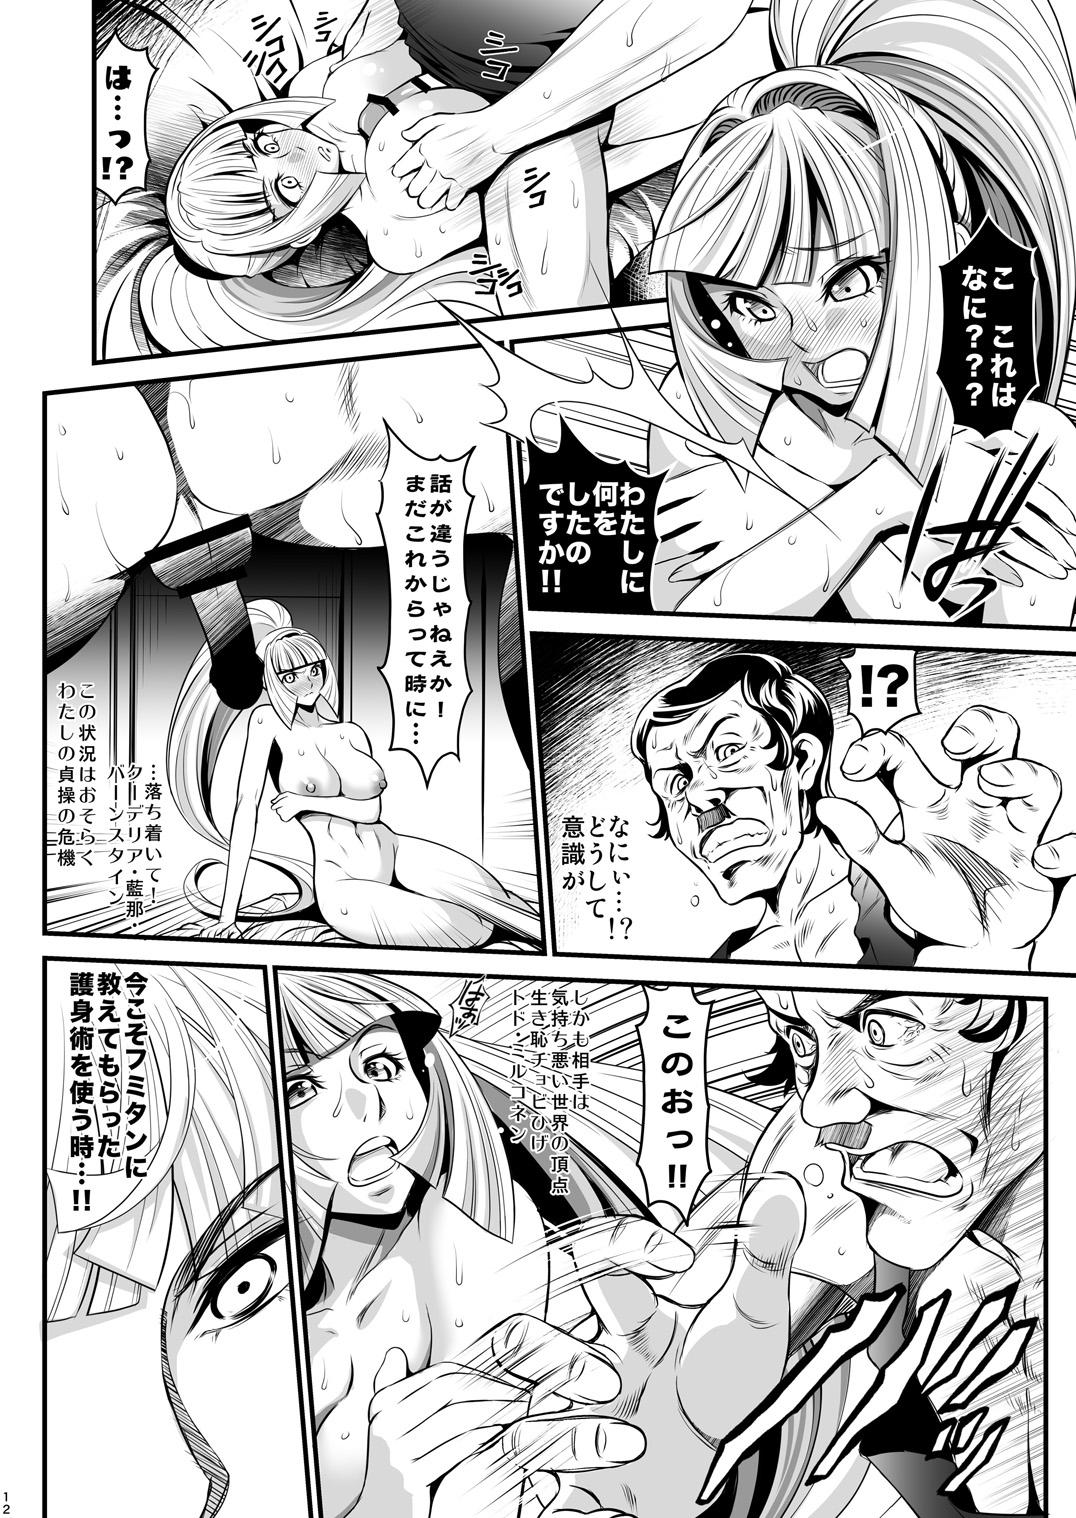 Humiliation Chobihige Yobai - Mobile suit gundam tekketsu no orphans Jeans - Page 12